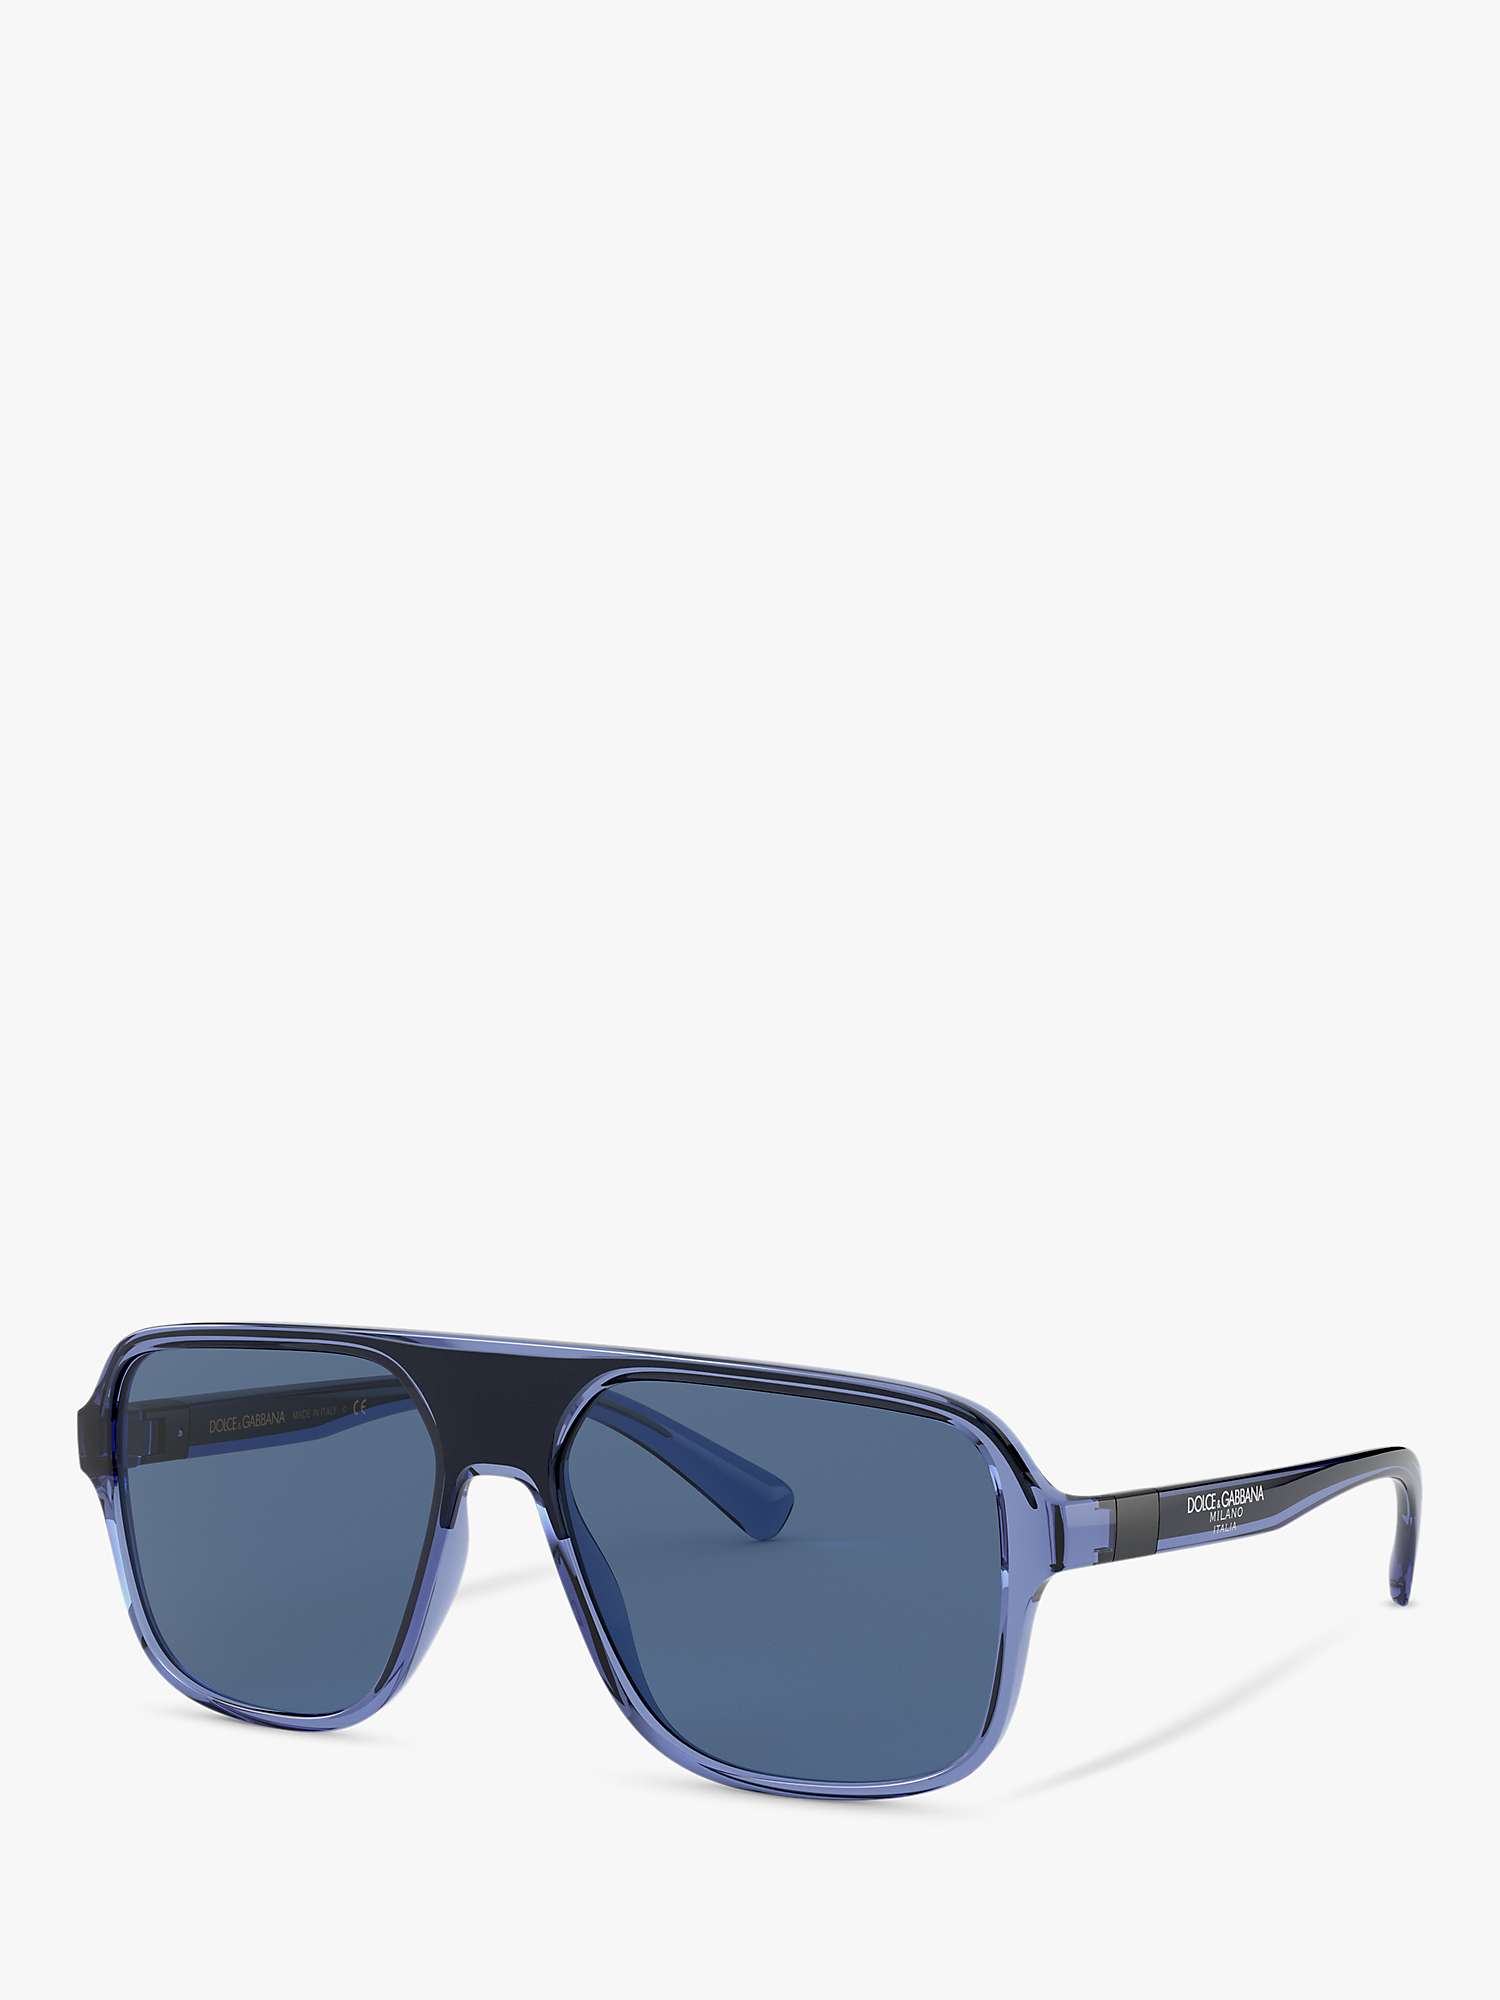 Dolce & Gabbana DG6134 Men's Square Sunglasses, Blue/Black at John ...